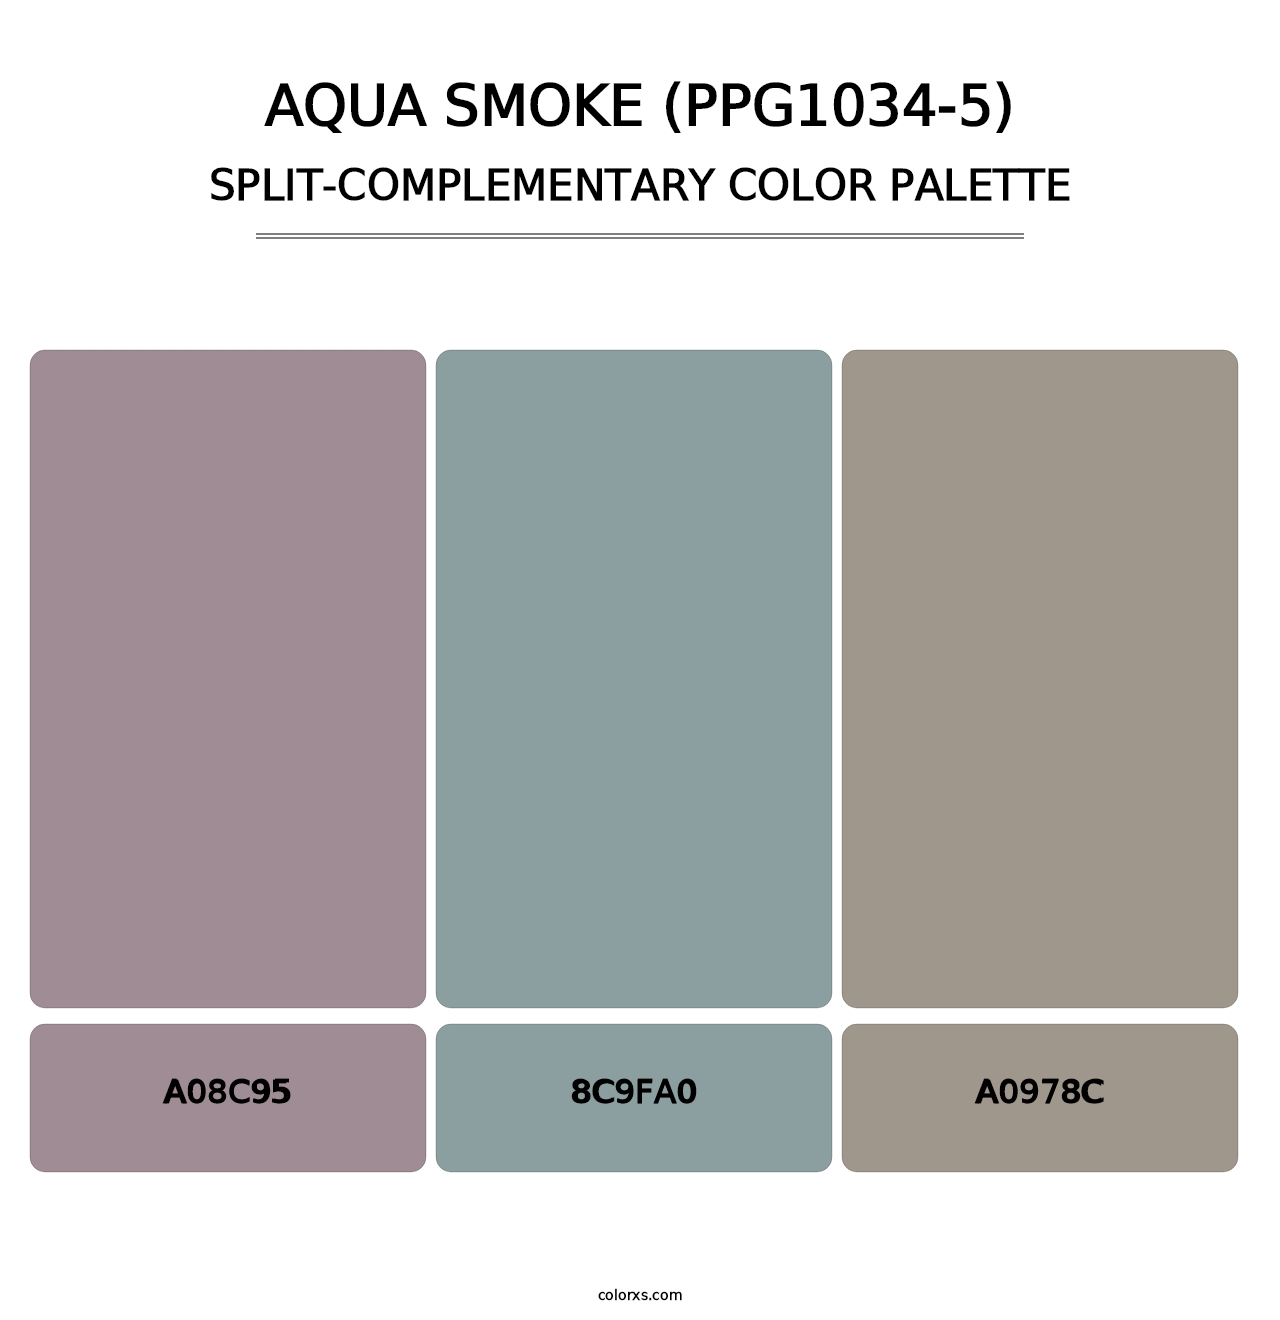 Aqua Smoke (PPG1034-5) - Split-Complementary Color Palette